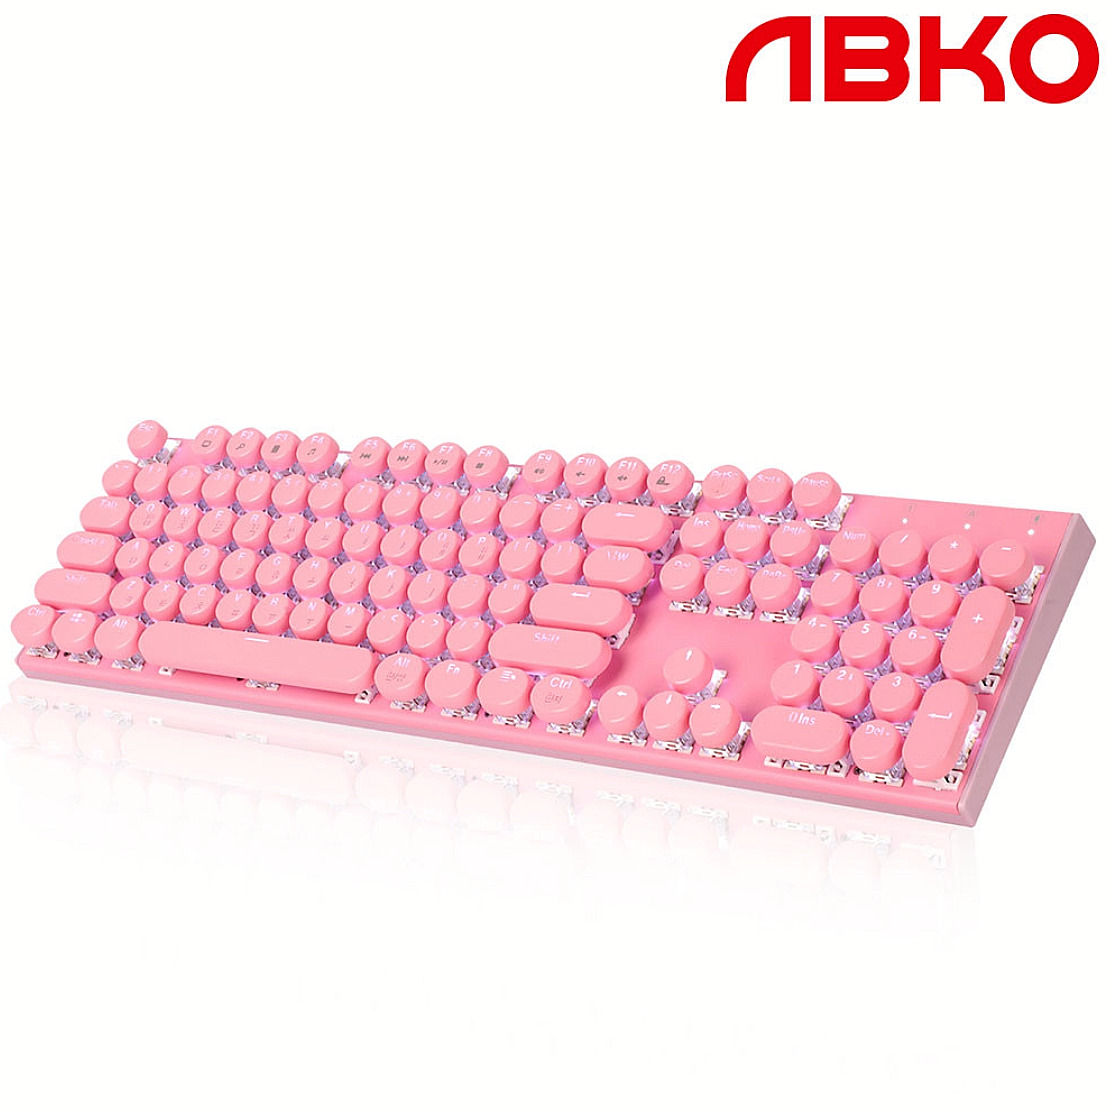 ABKO K840 Mechanical Gaming Keyboard 104Keys Quick Swap Switch(Blue Switch)